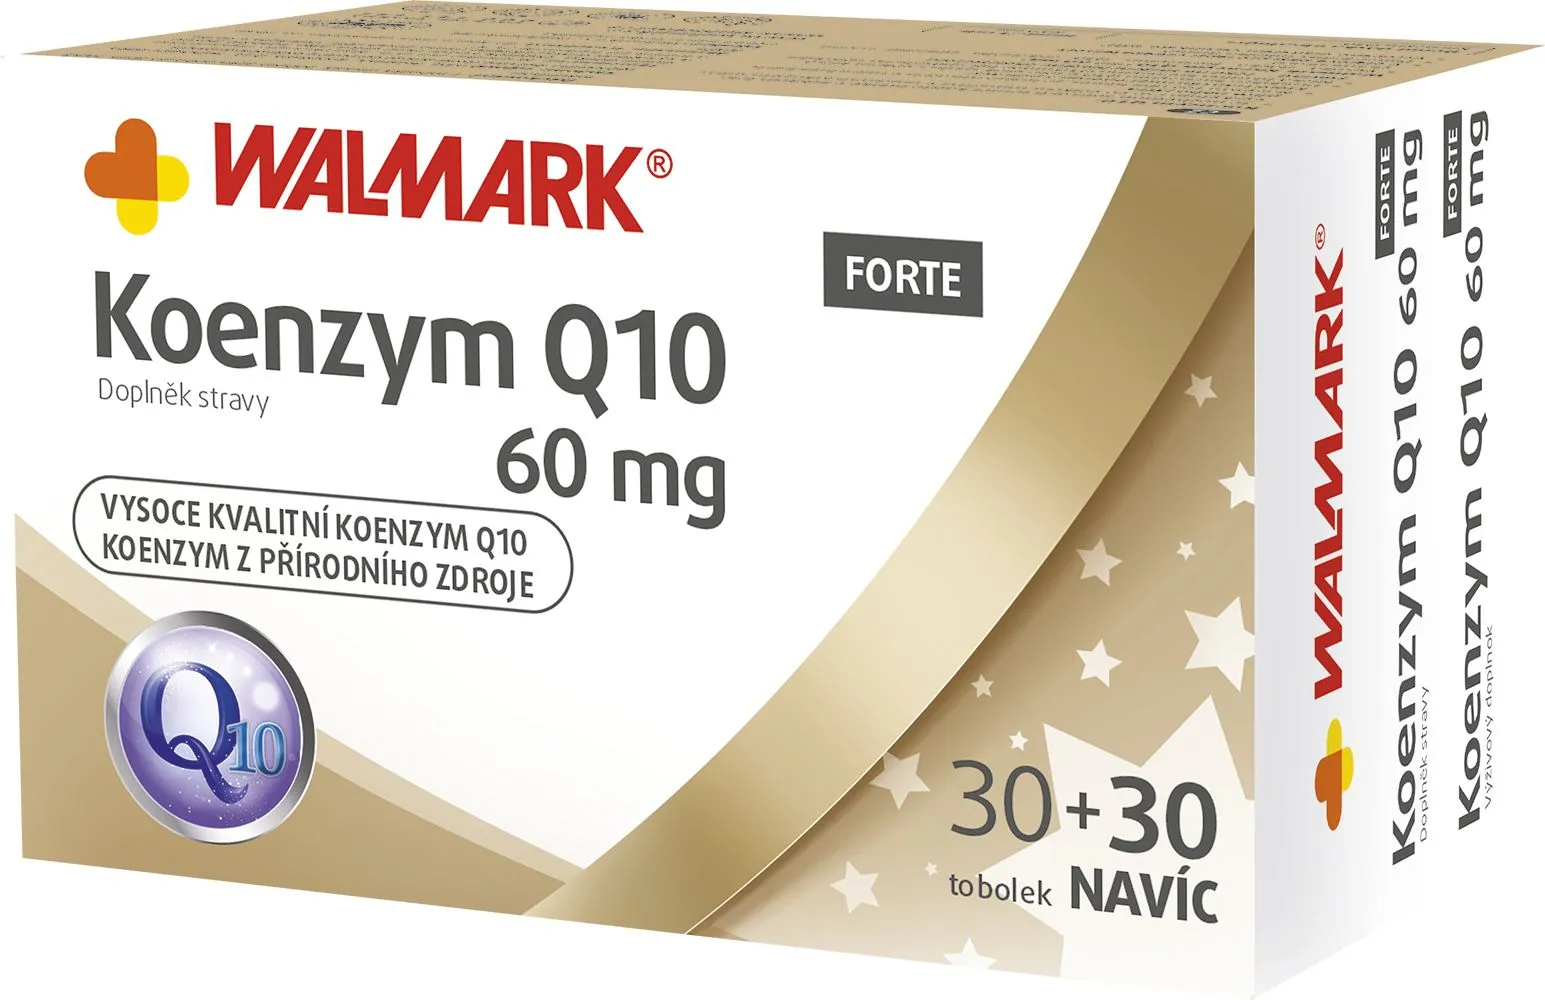 Walmark Koenzym Q10 60 mg 30+30 tobolek Vánoce 2018